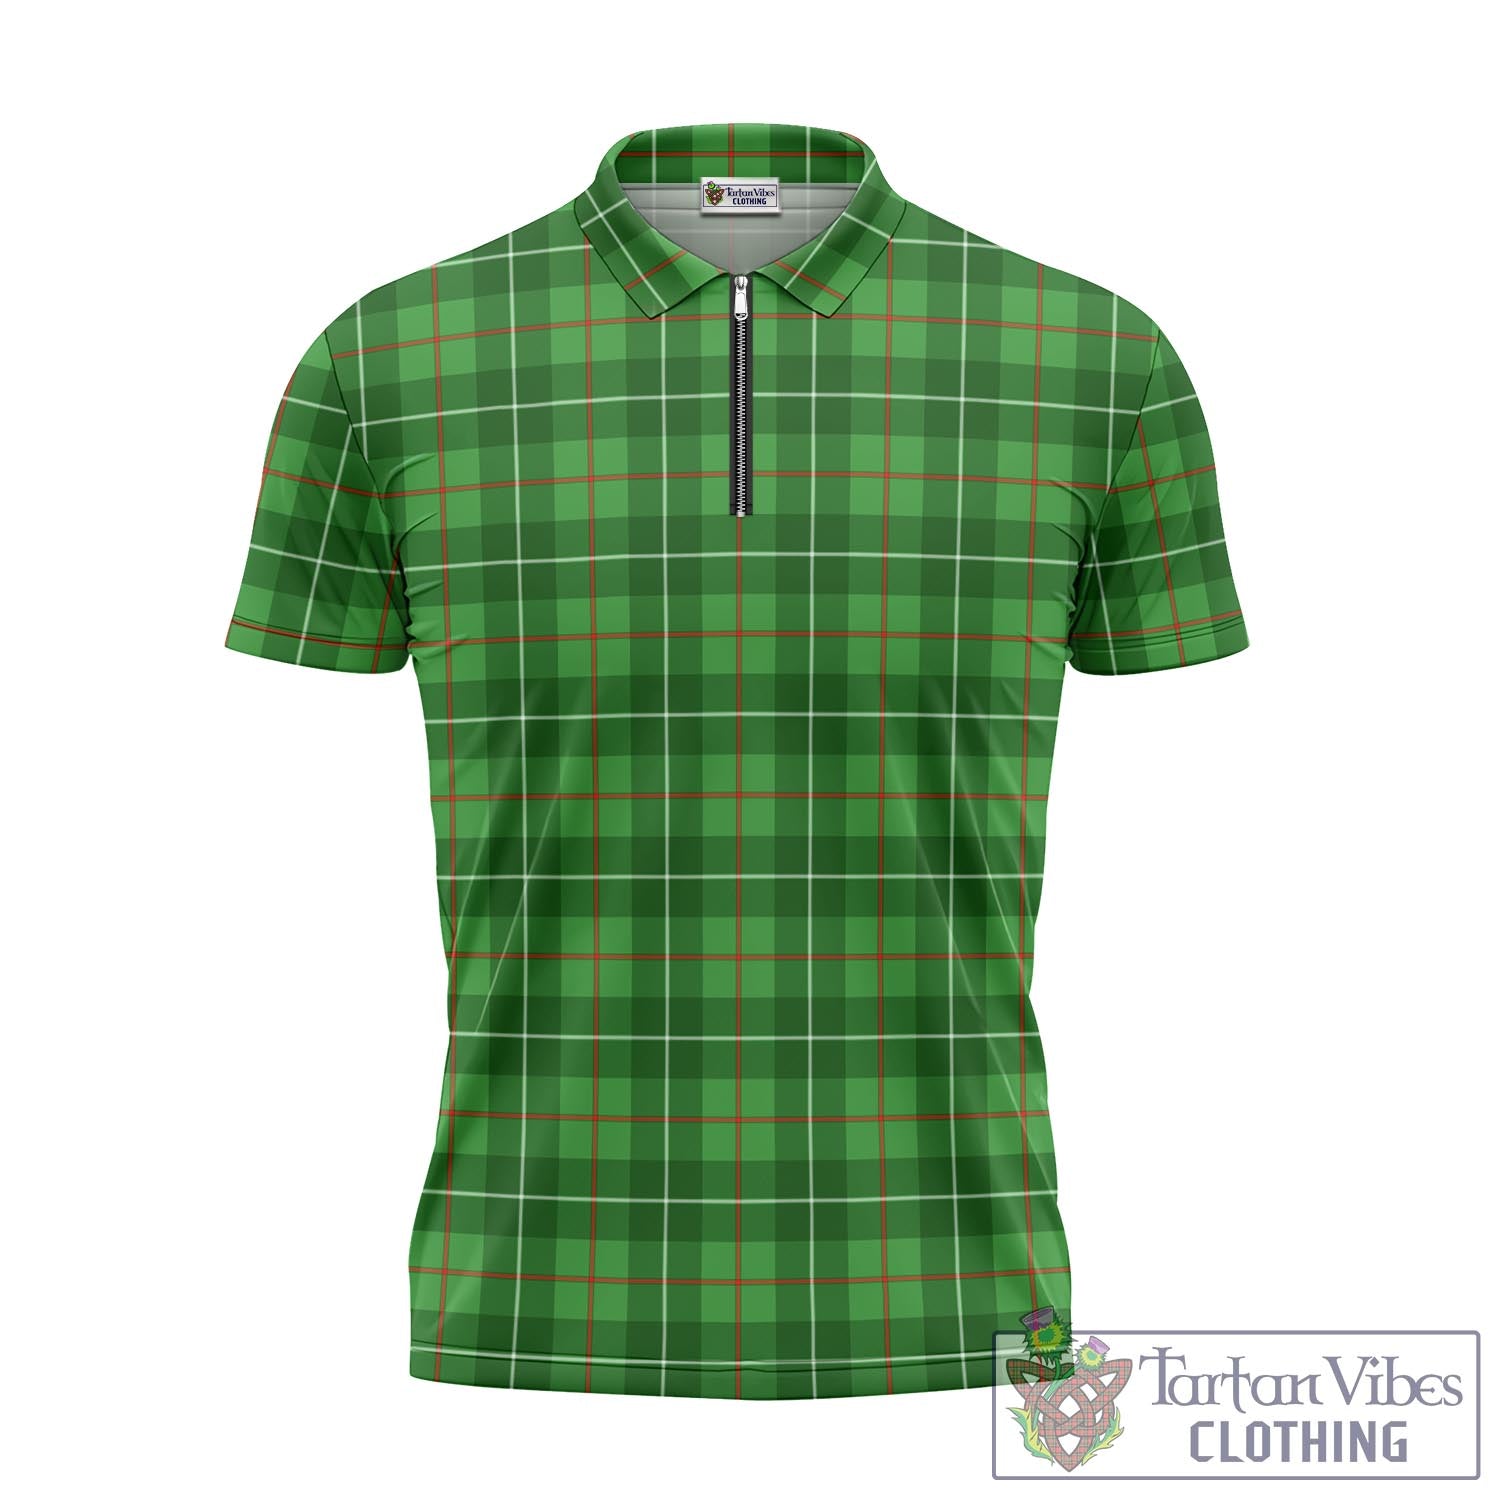 Tartan Vibes Clothing Galloway Tartan Zipper Polo Shirt